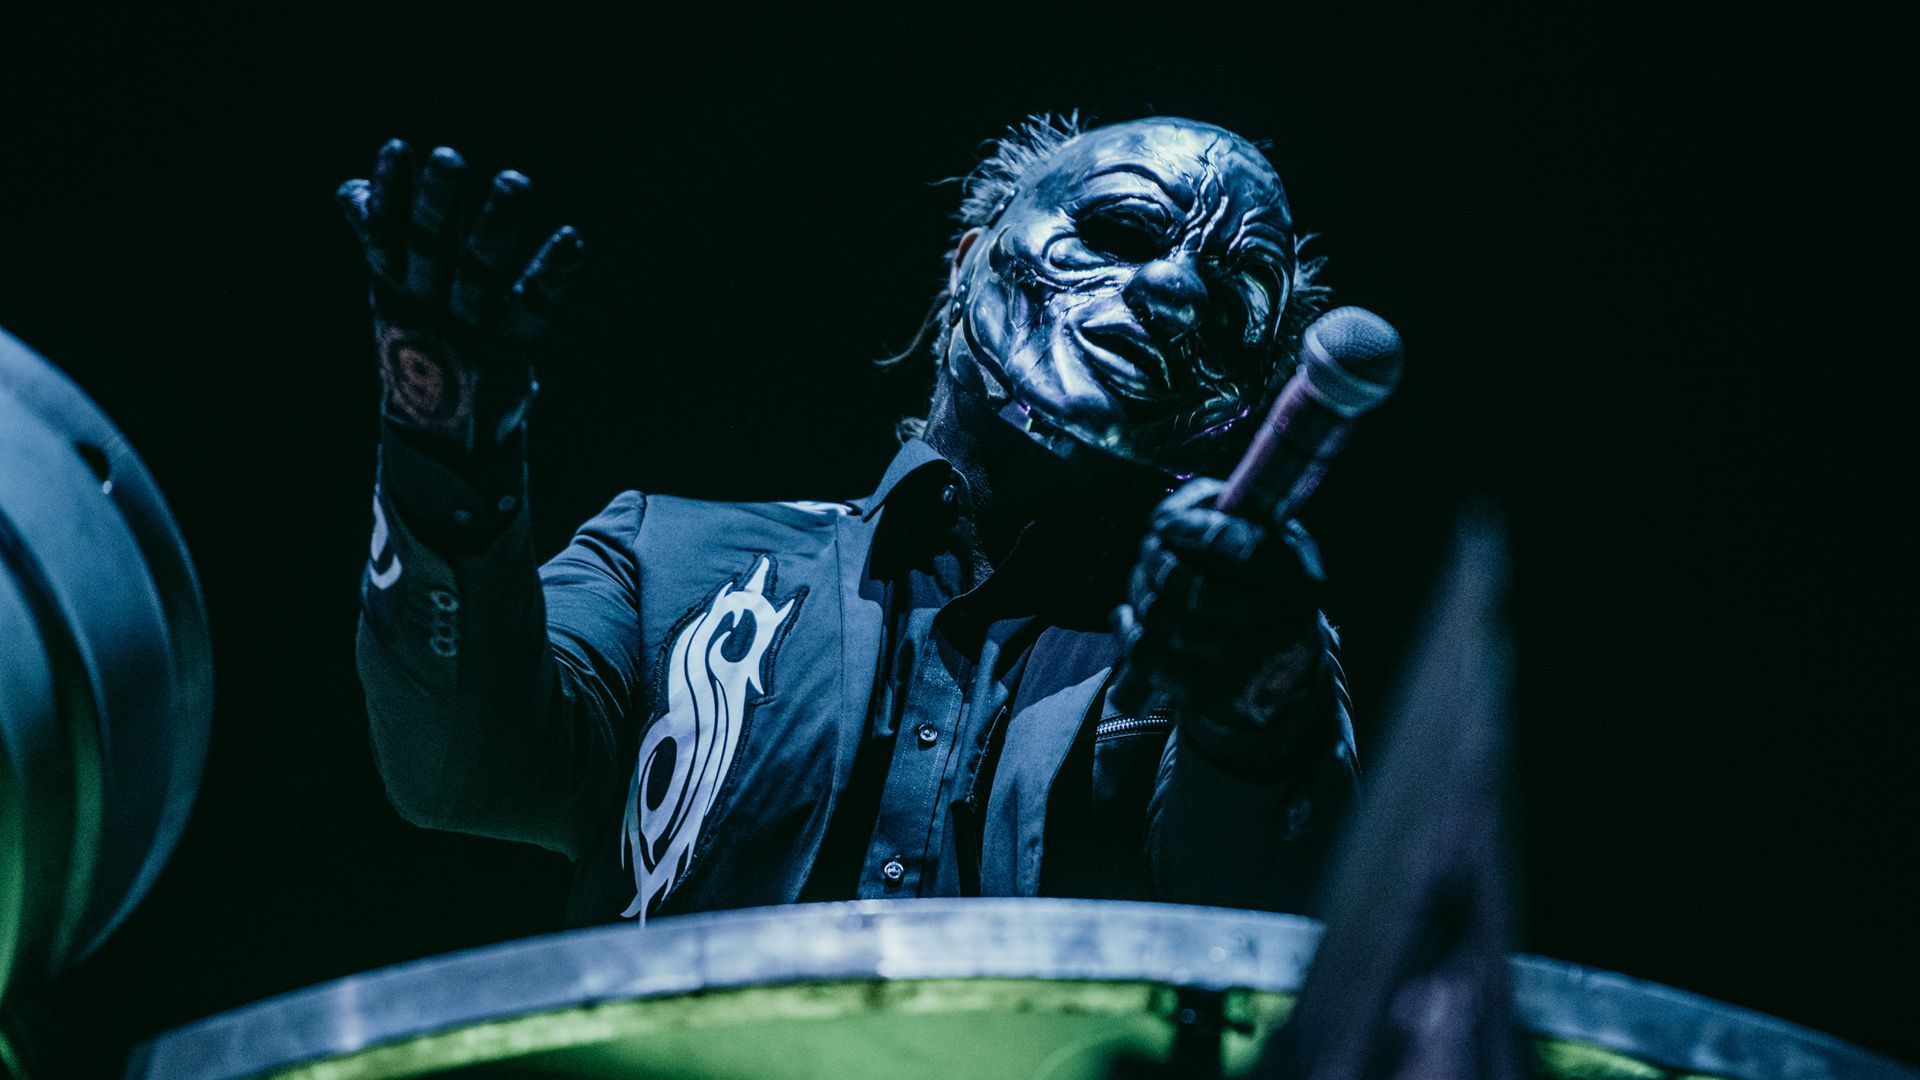 Shawn Crahan of Slipknot performs in Denmark in February 2020. 